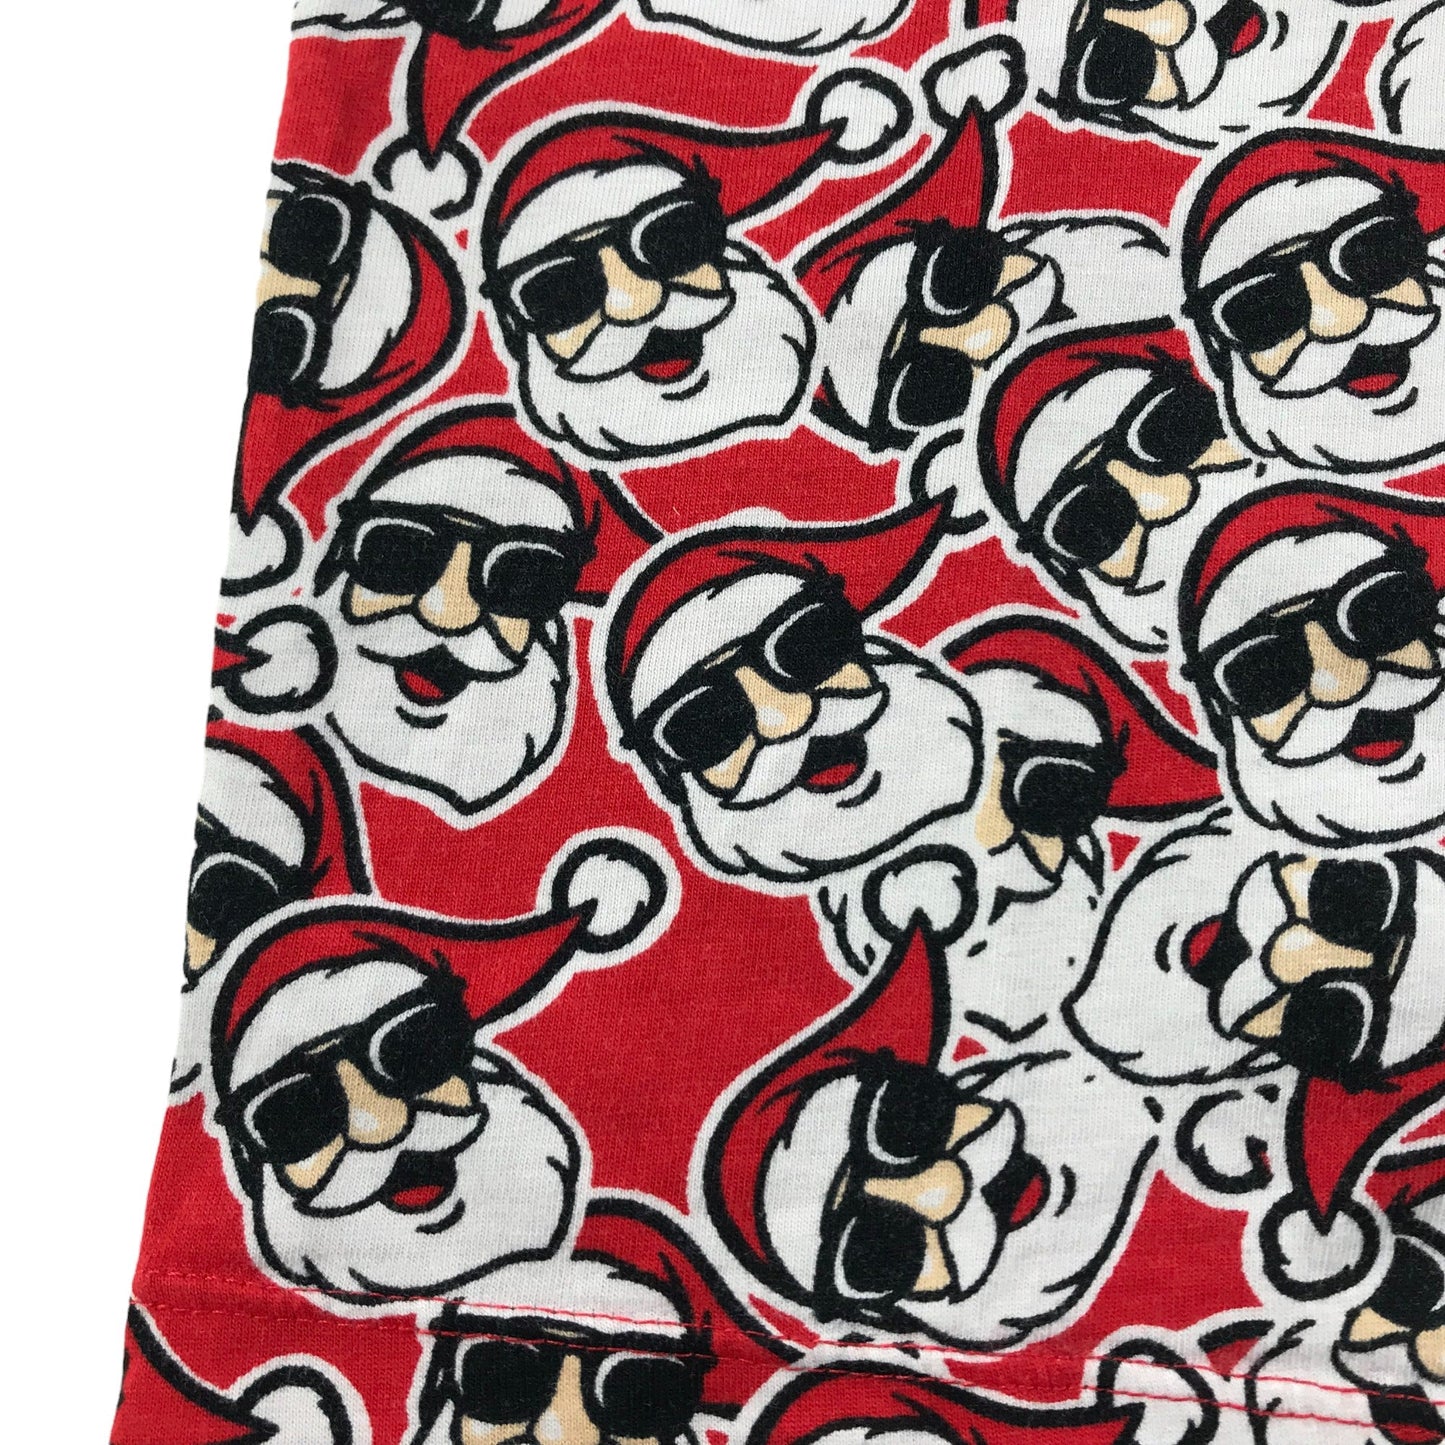 Next Christmas T-Shirt Red Santa Face Print Ho Ho Ho Sequin Text Short Sleeve